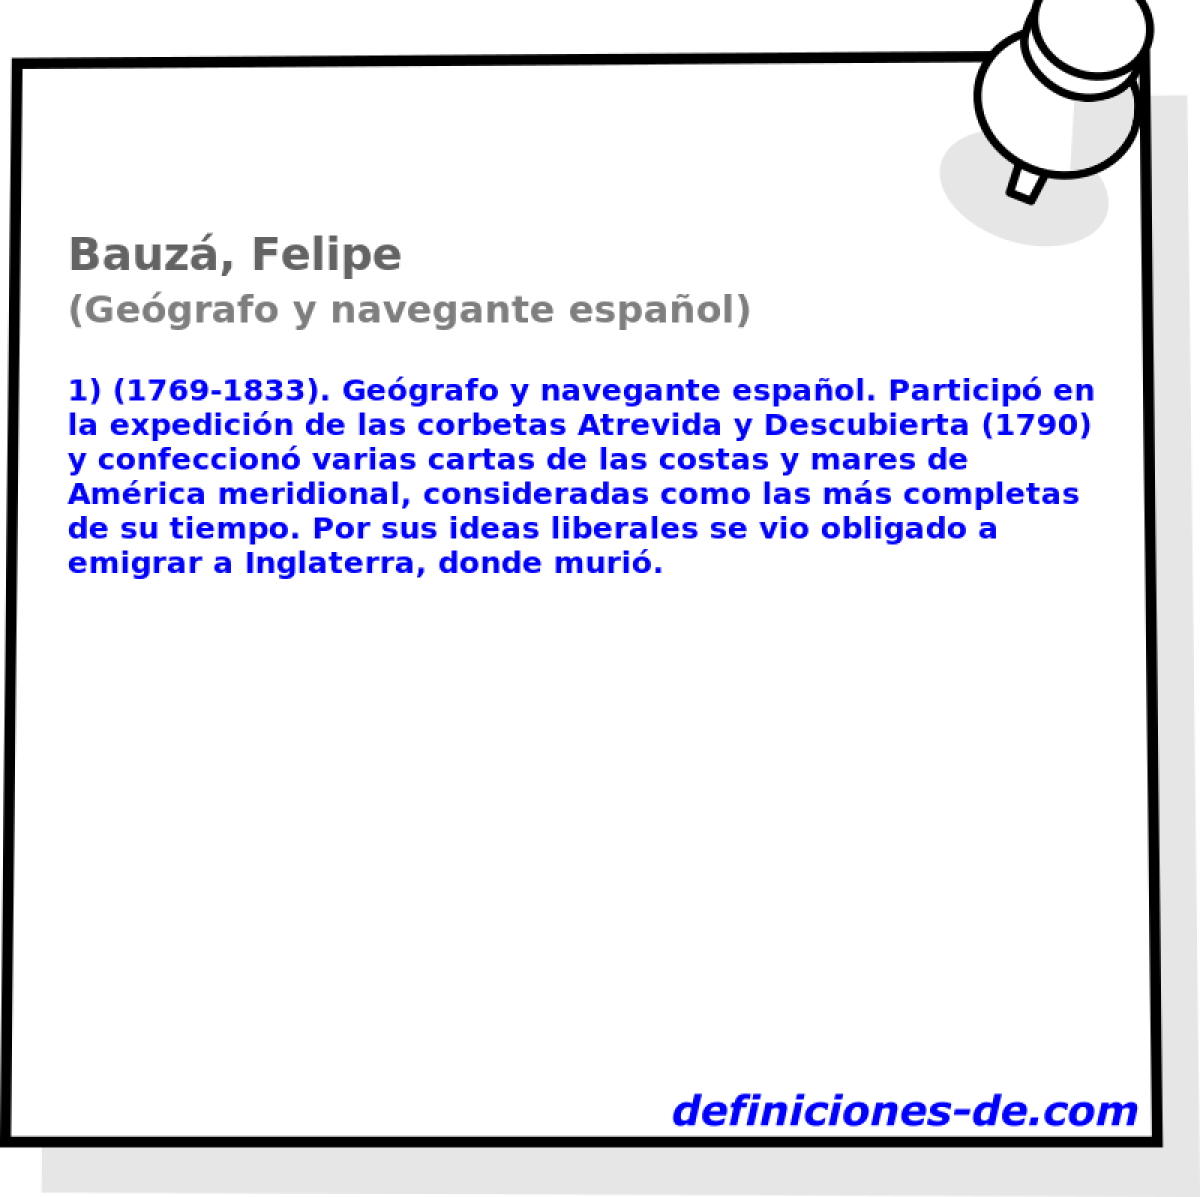 Bauz, Felipe (Gegrafo y navegante espaol)